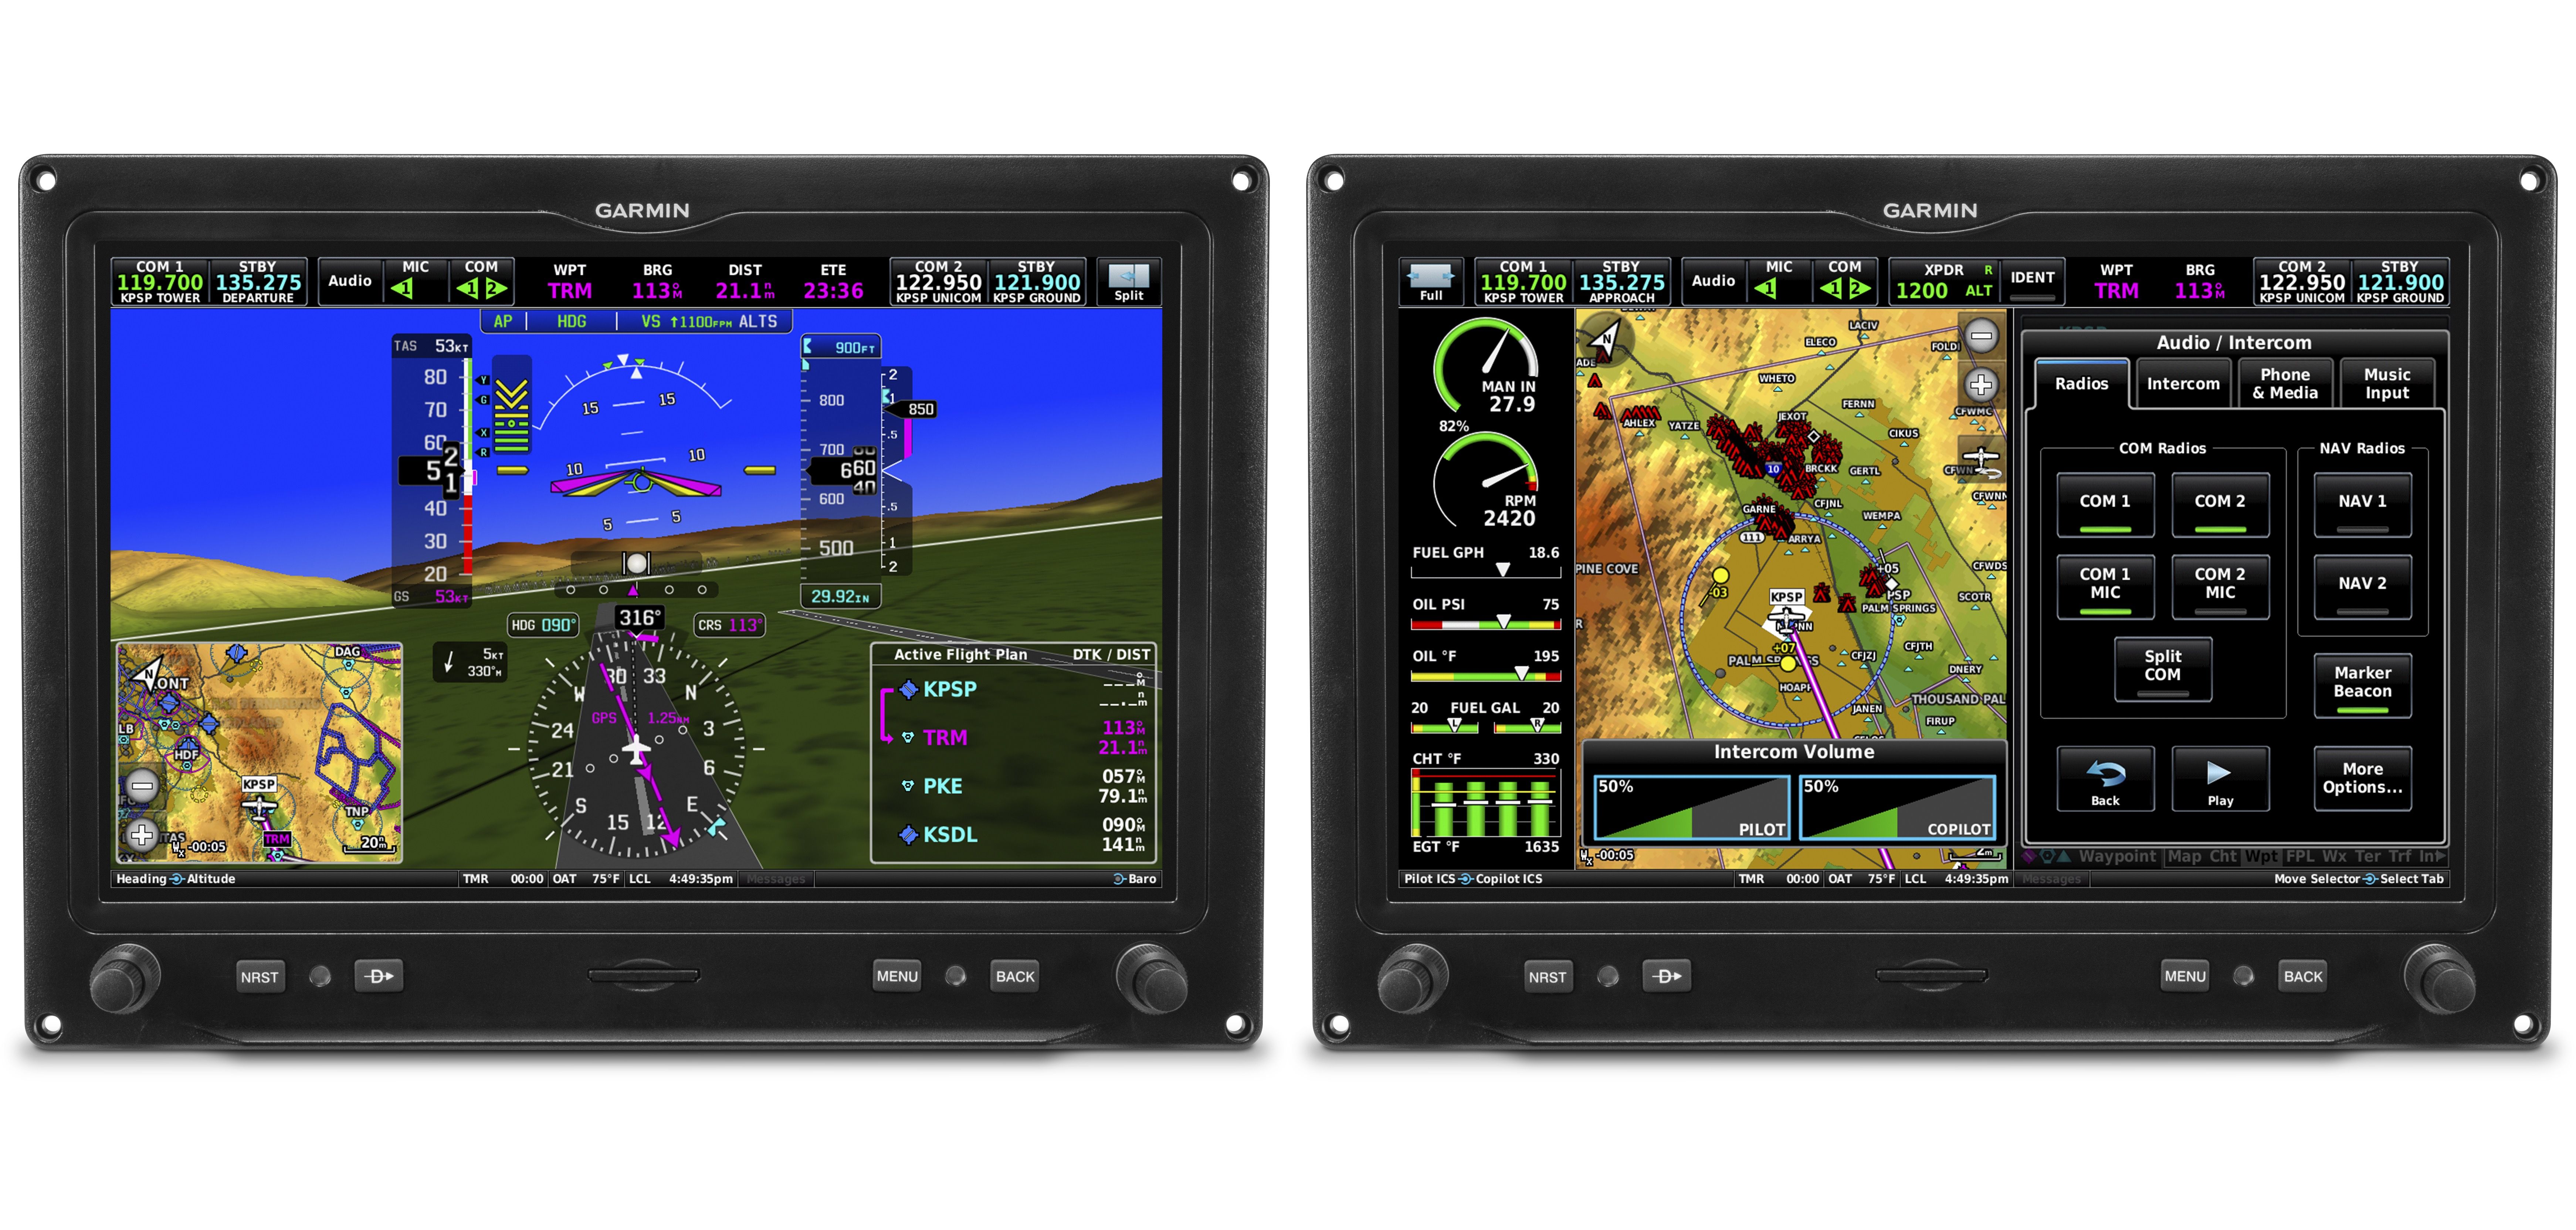 øretelefon hjælpeløshed Sprog Garmin Updates G3X Touch And G5 Features For Certified Aircraft - AVweb